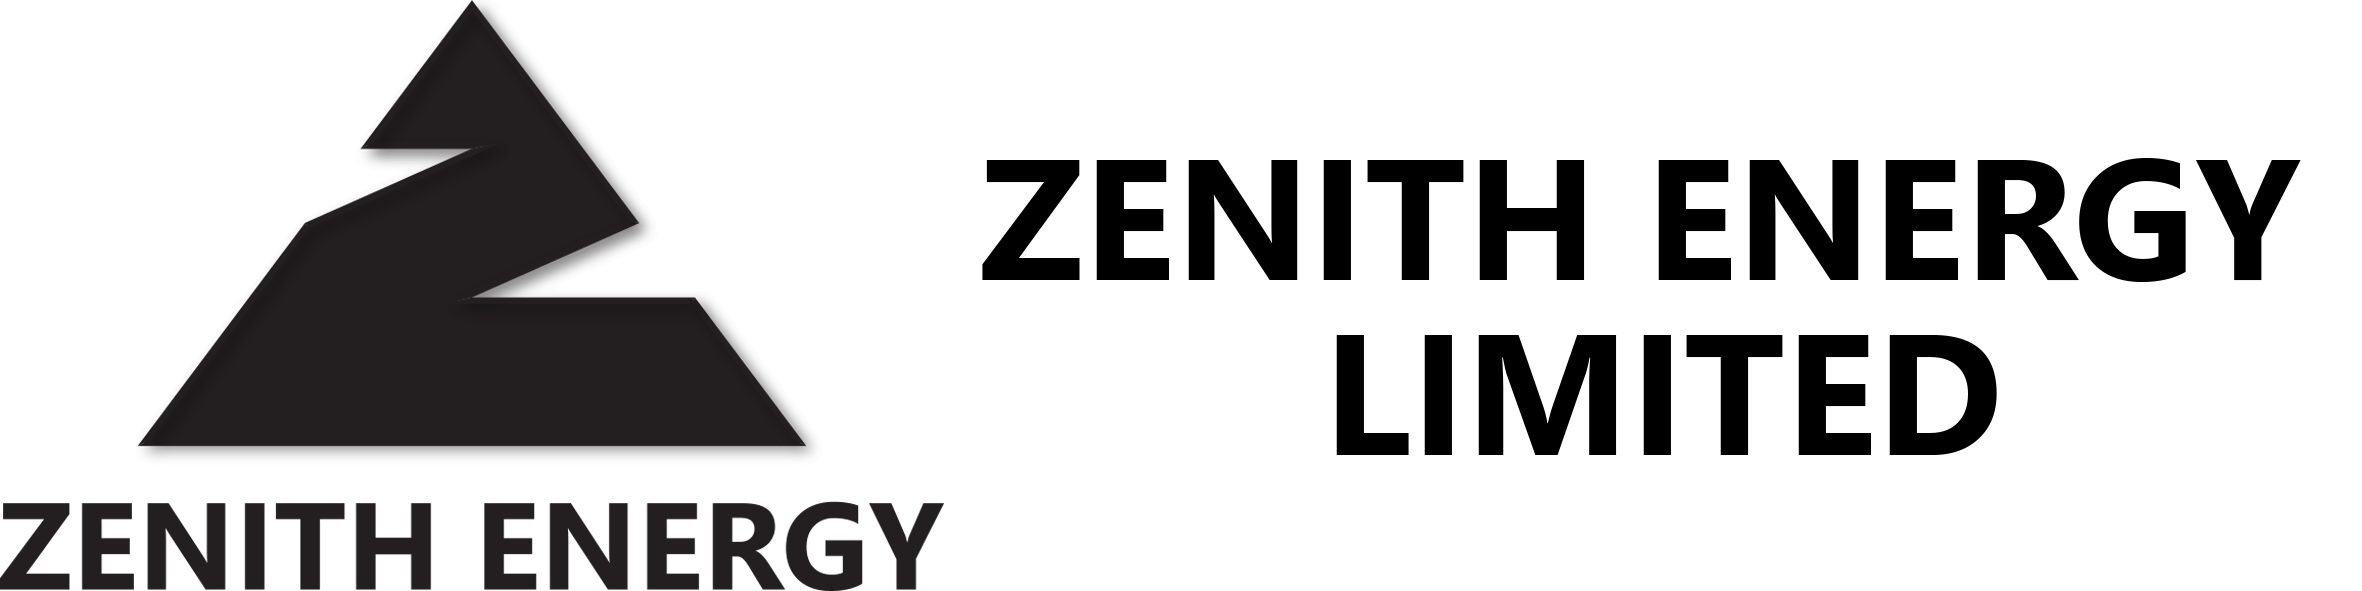 Zenith Energy Limited Logo